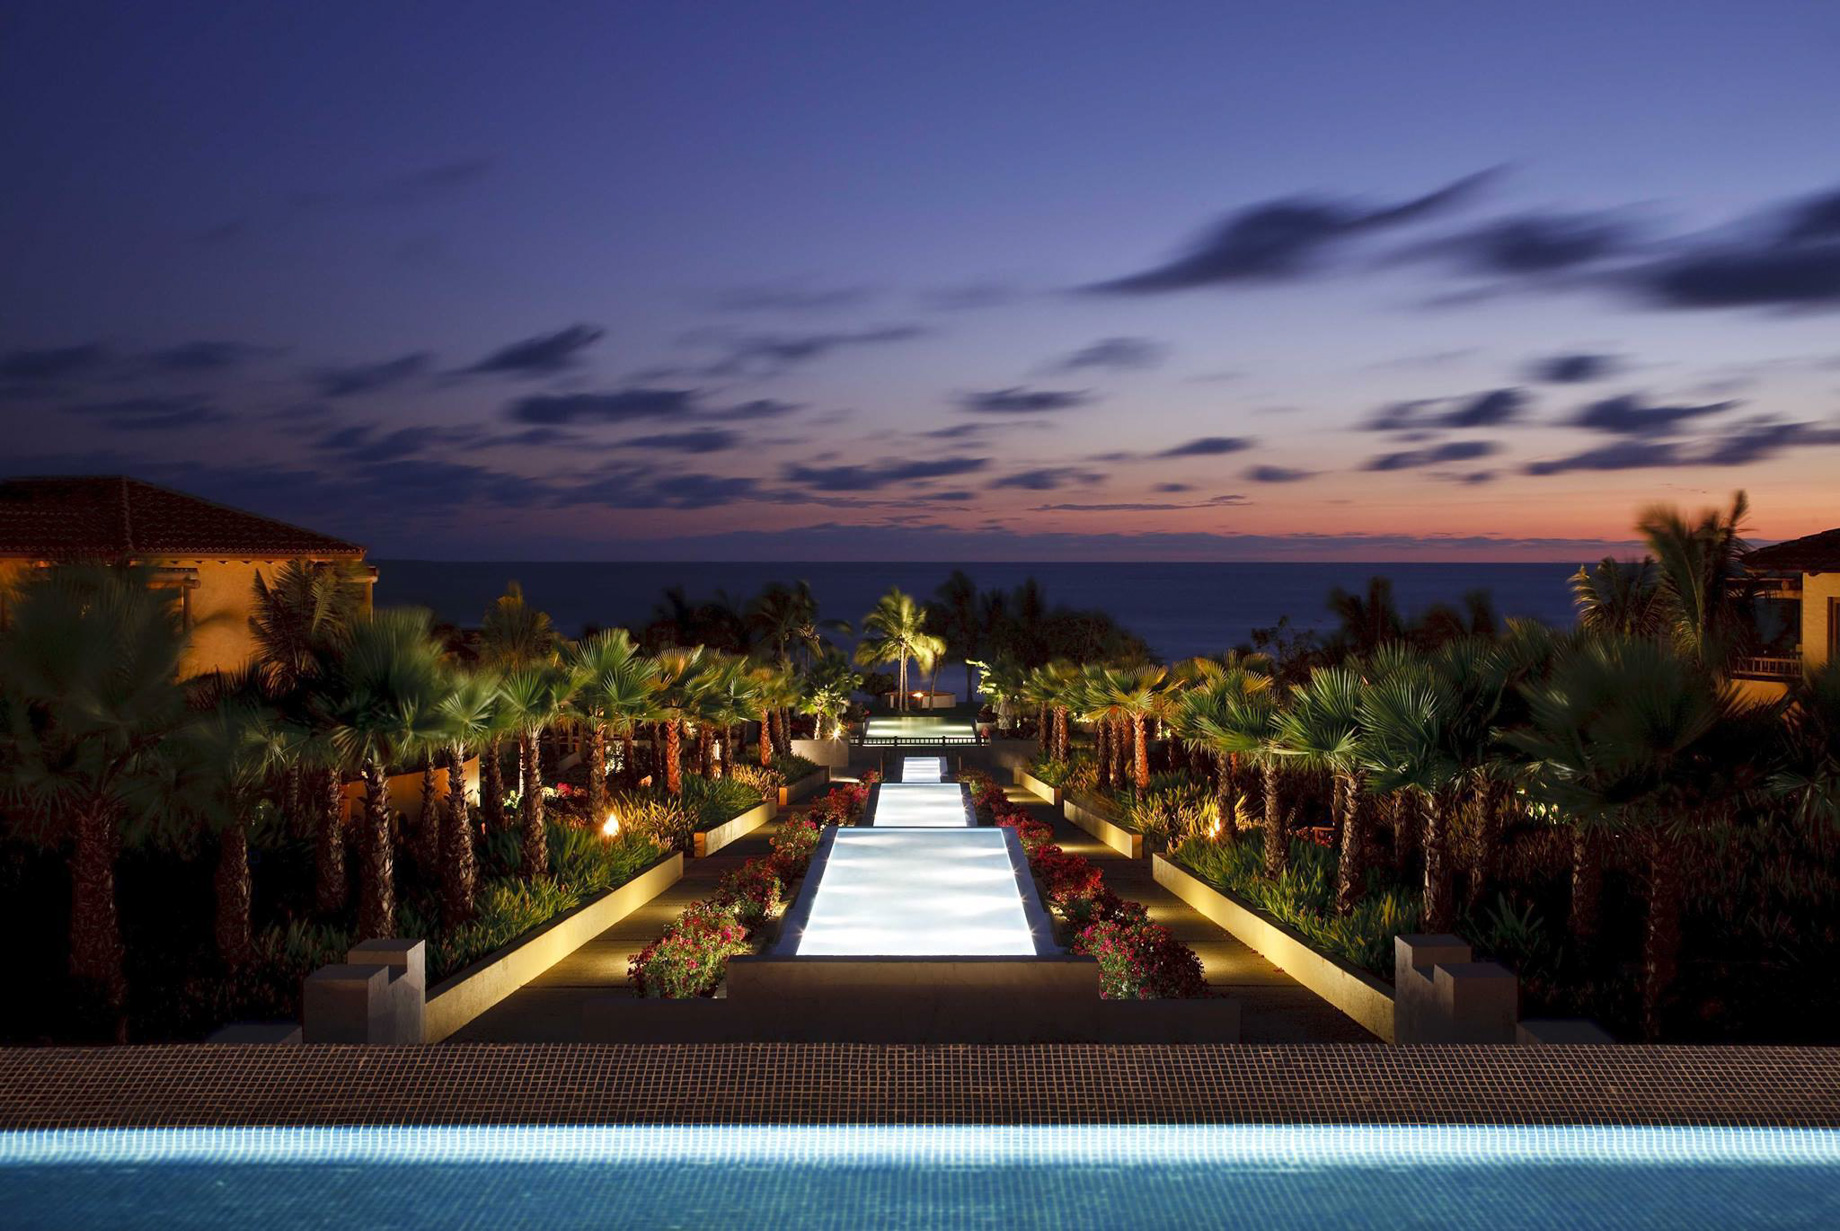 The St. Regis Punta Mita Resort – Nayarit, Mexico – Resort Sunset